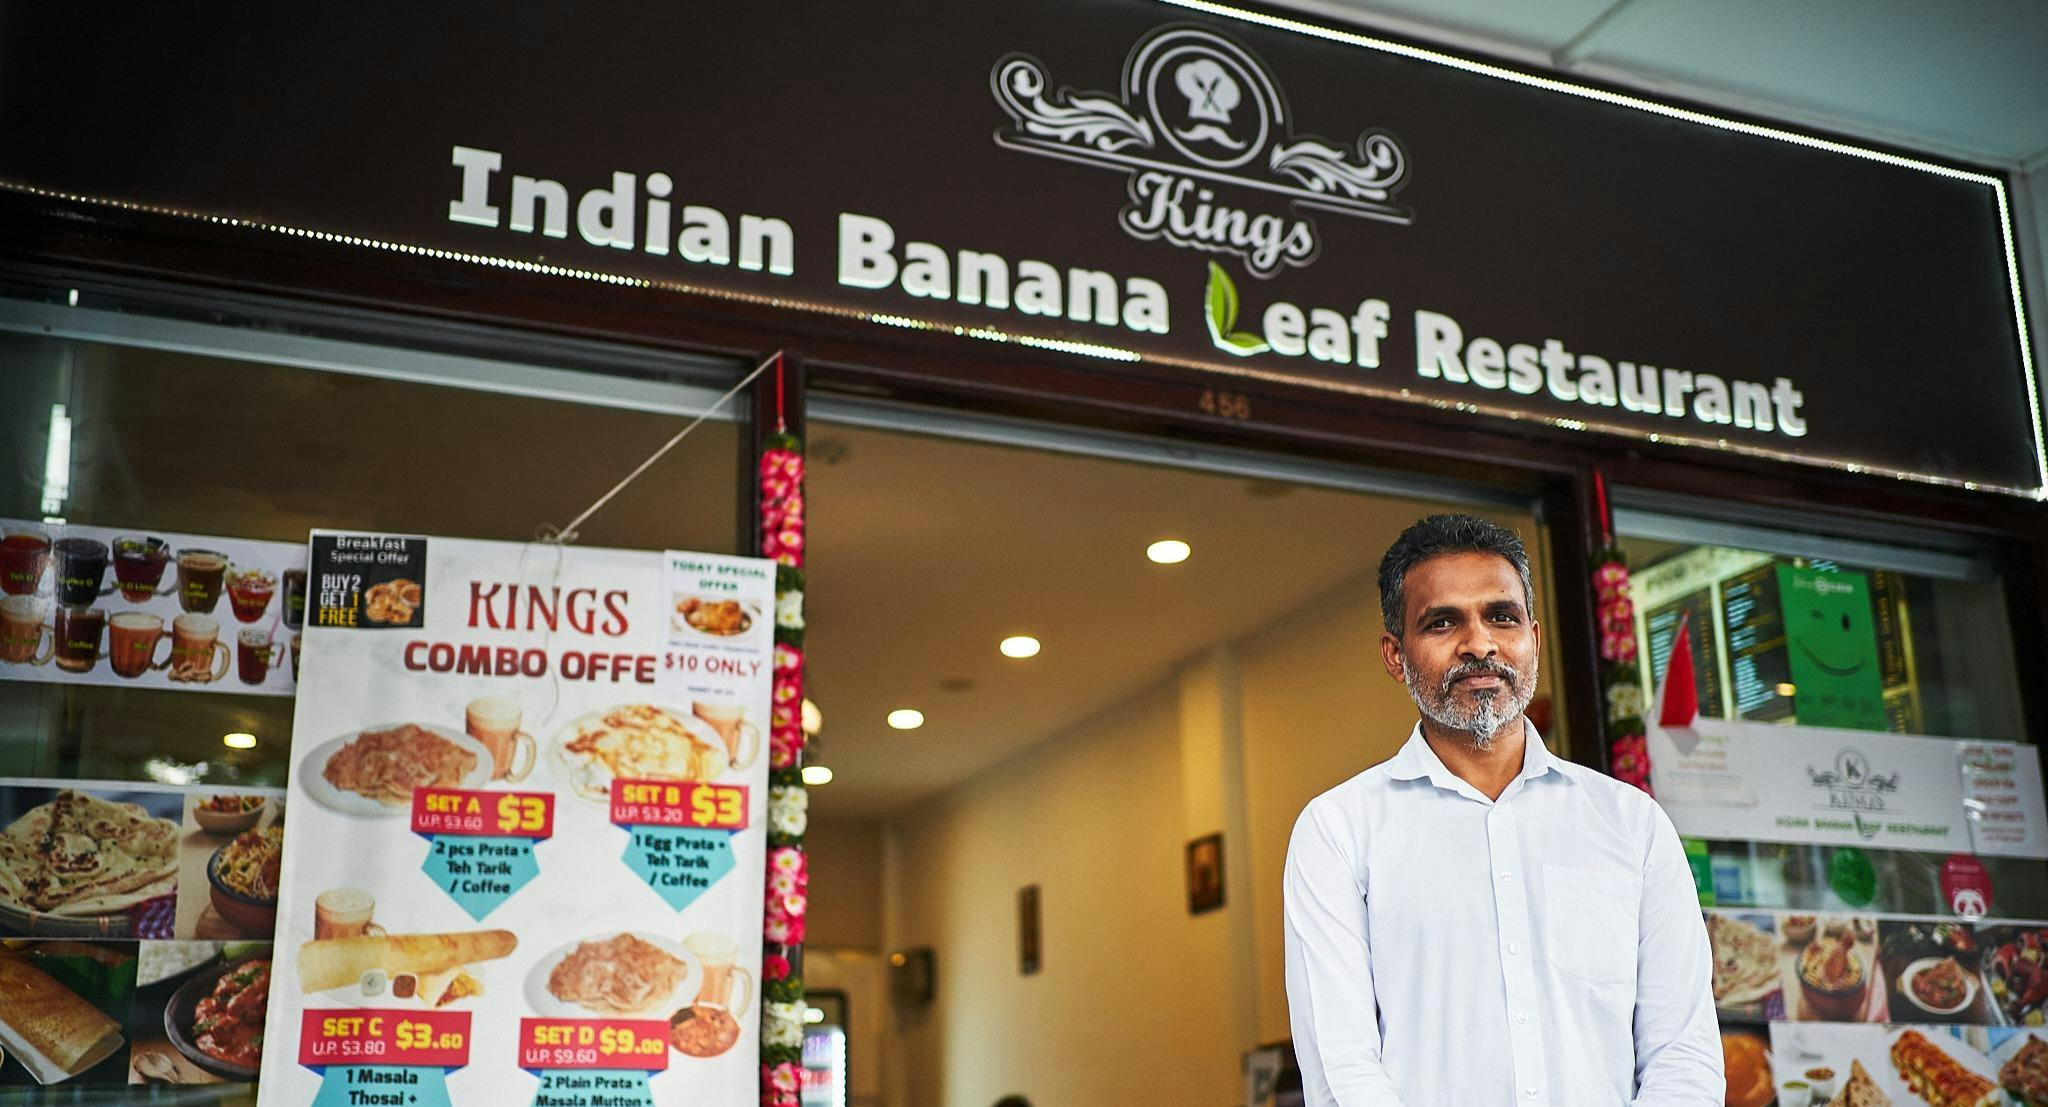 Photo of restaurant King's Indian Banana Leaf Restaurant in Bukit Timah, 新加坡